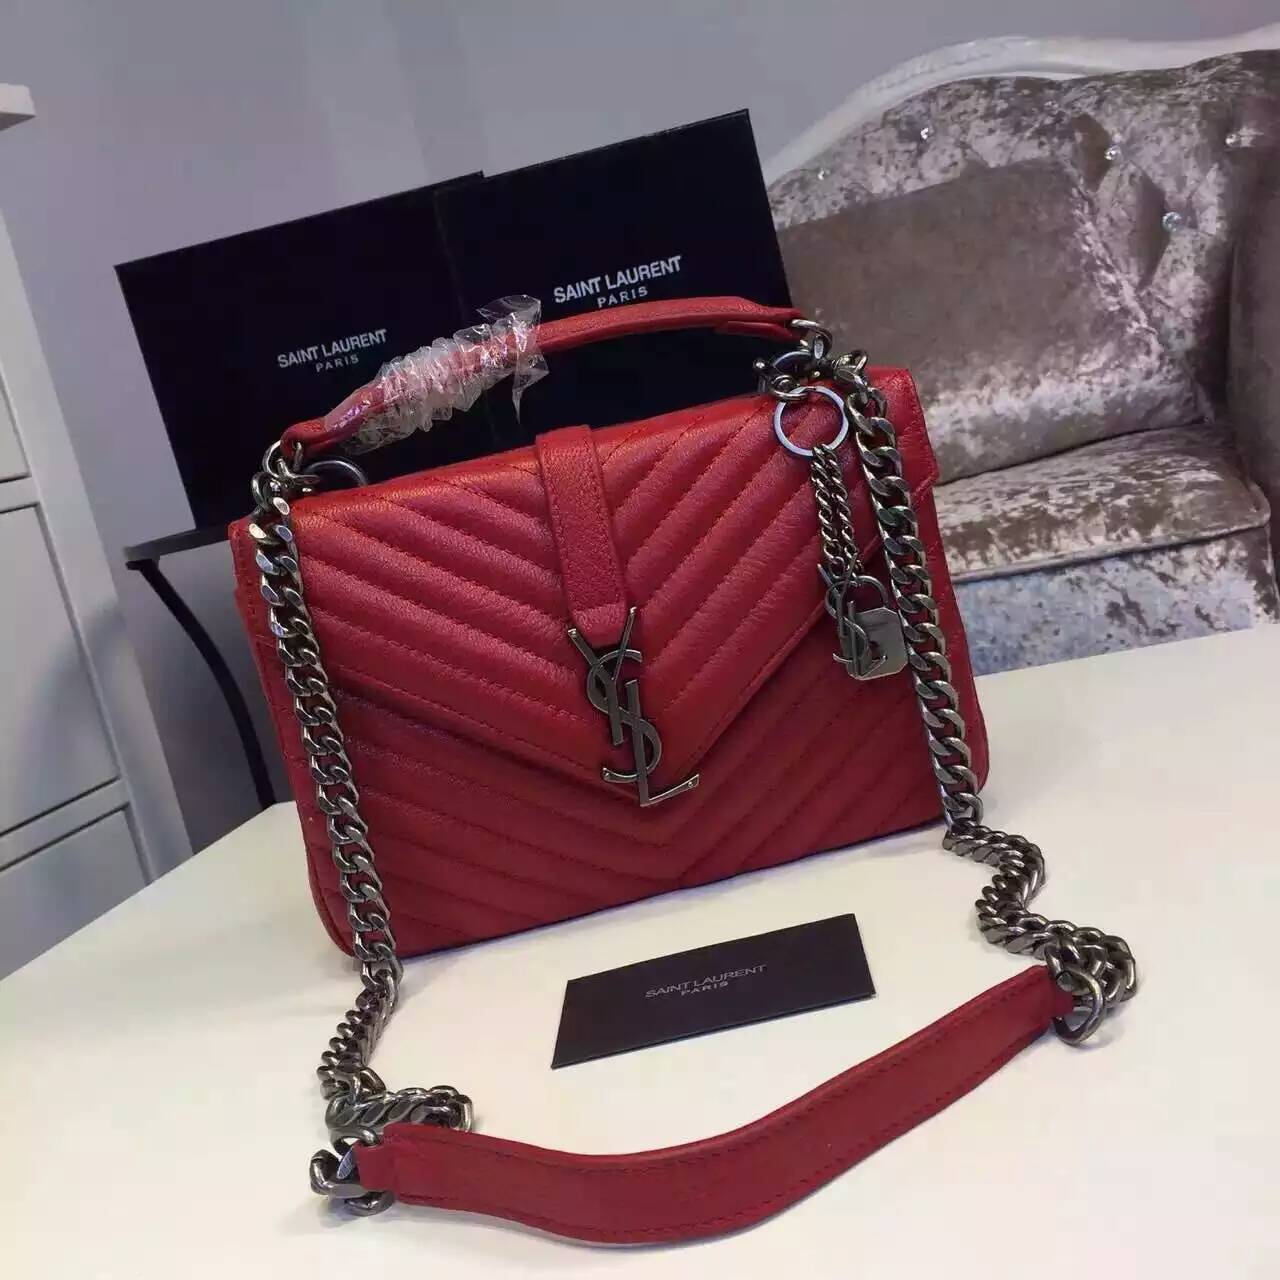 2016 New Saint Laurent Bag Cheap Sale-Saint Laurent Classic Medium COLLEGE MONOGRAM Bag in Red MATELASSE Leather